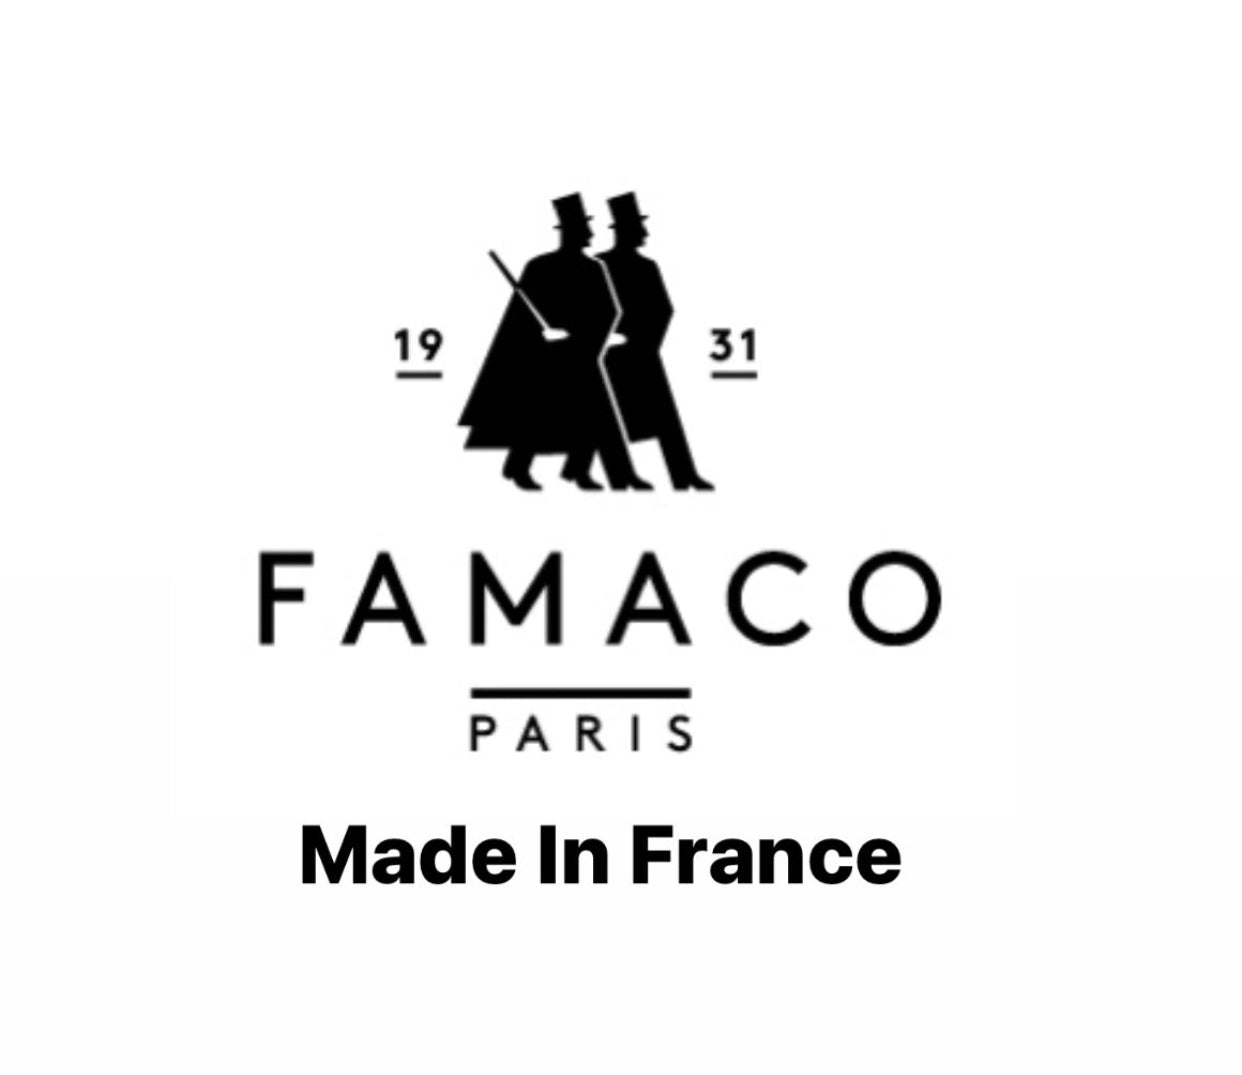 Famaco Blue Horizon Cream Polish 50ml Made In France